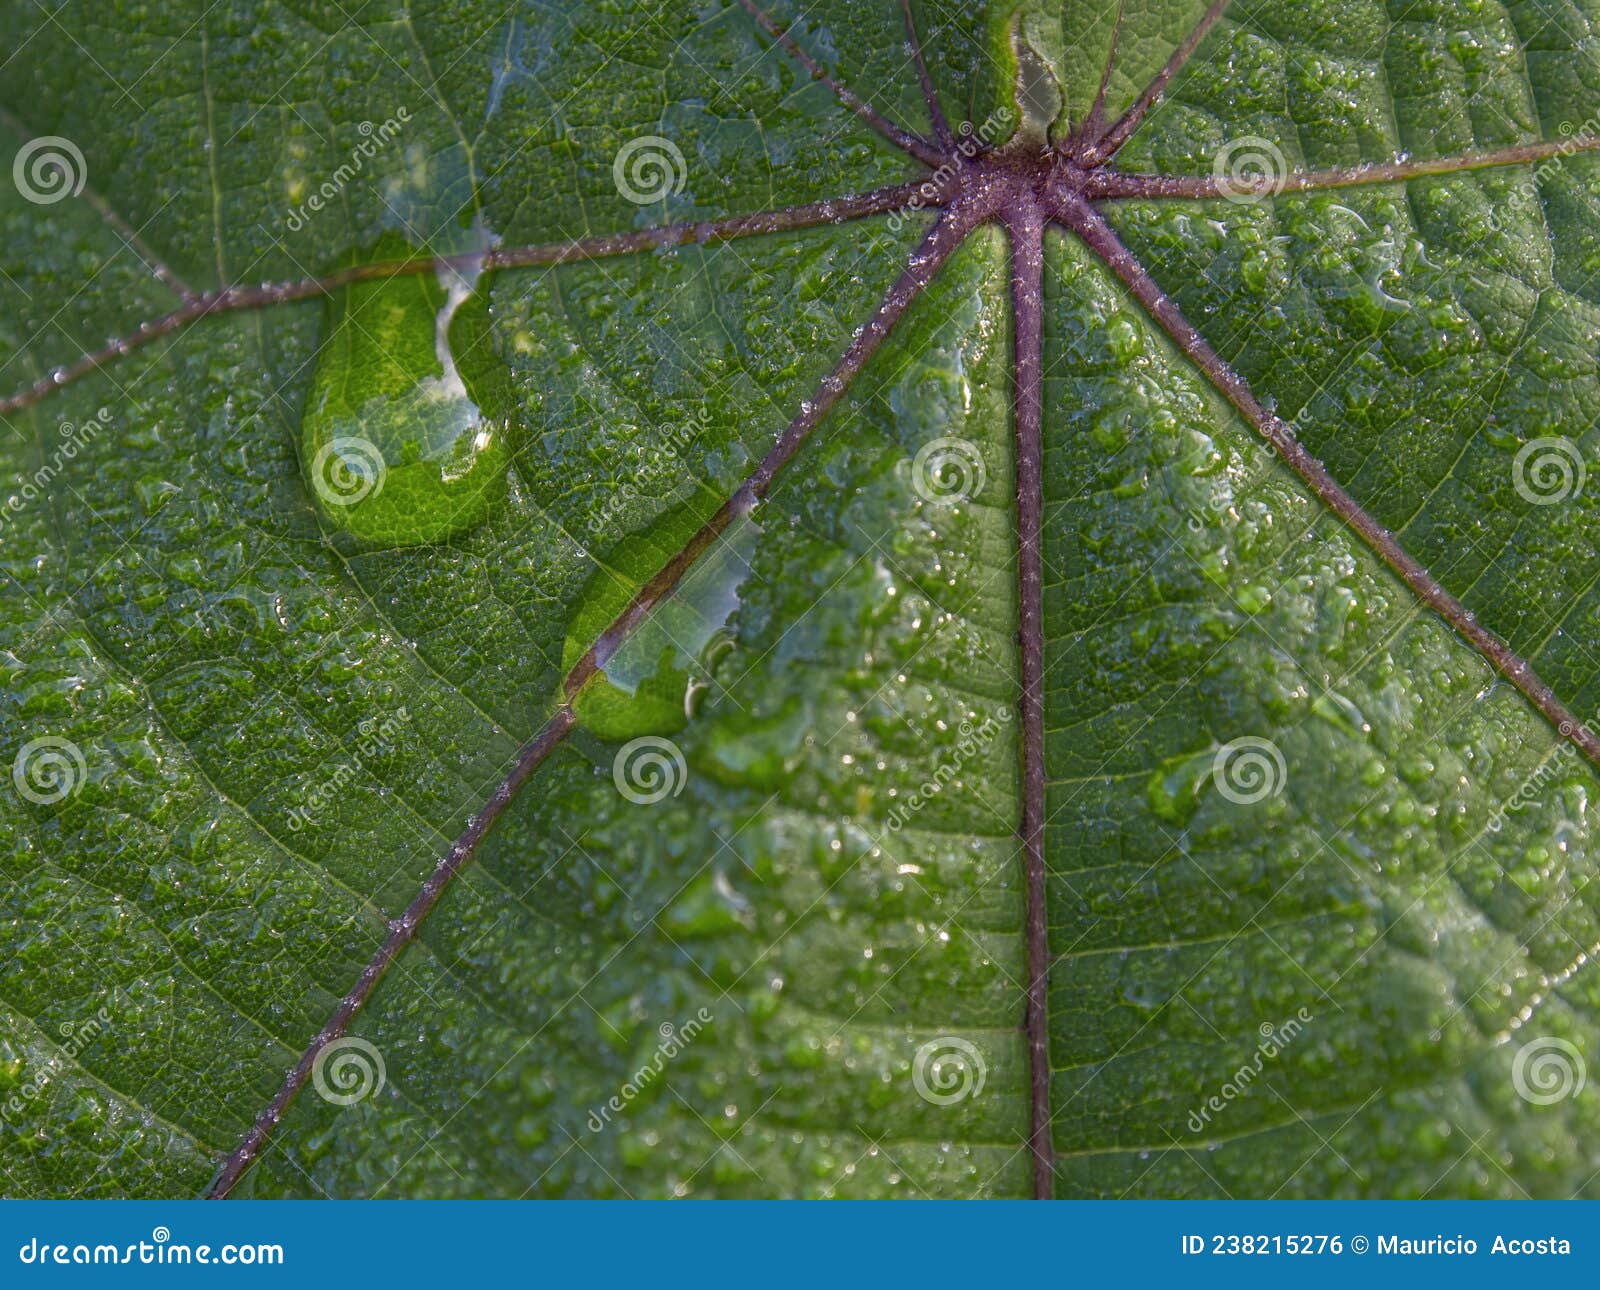 macro photography of a couple of rain drops on an erato vulcanica leaf